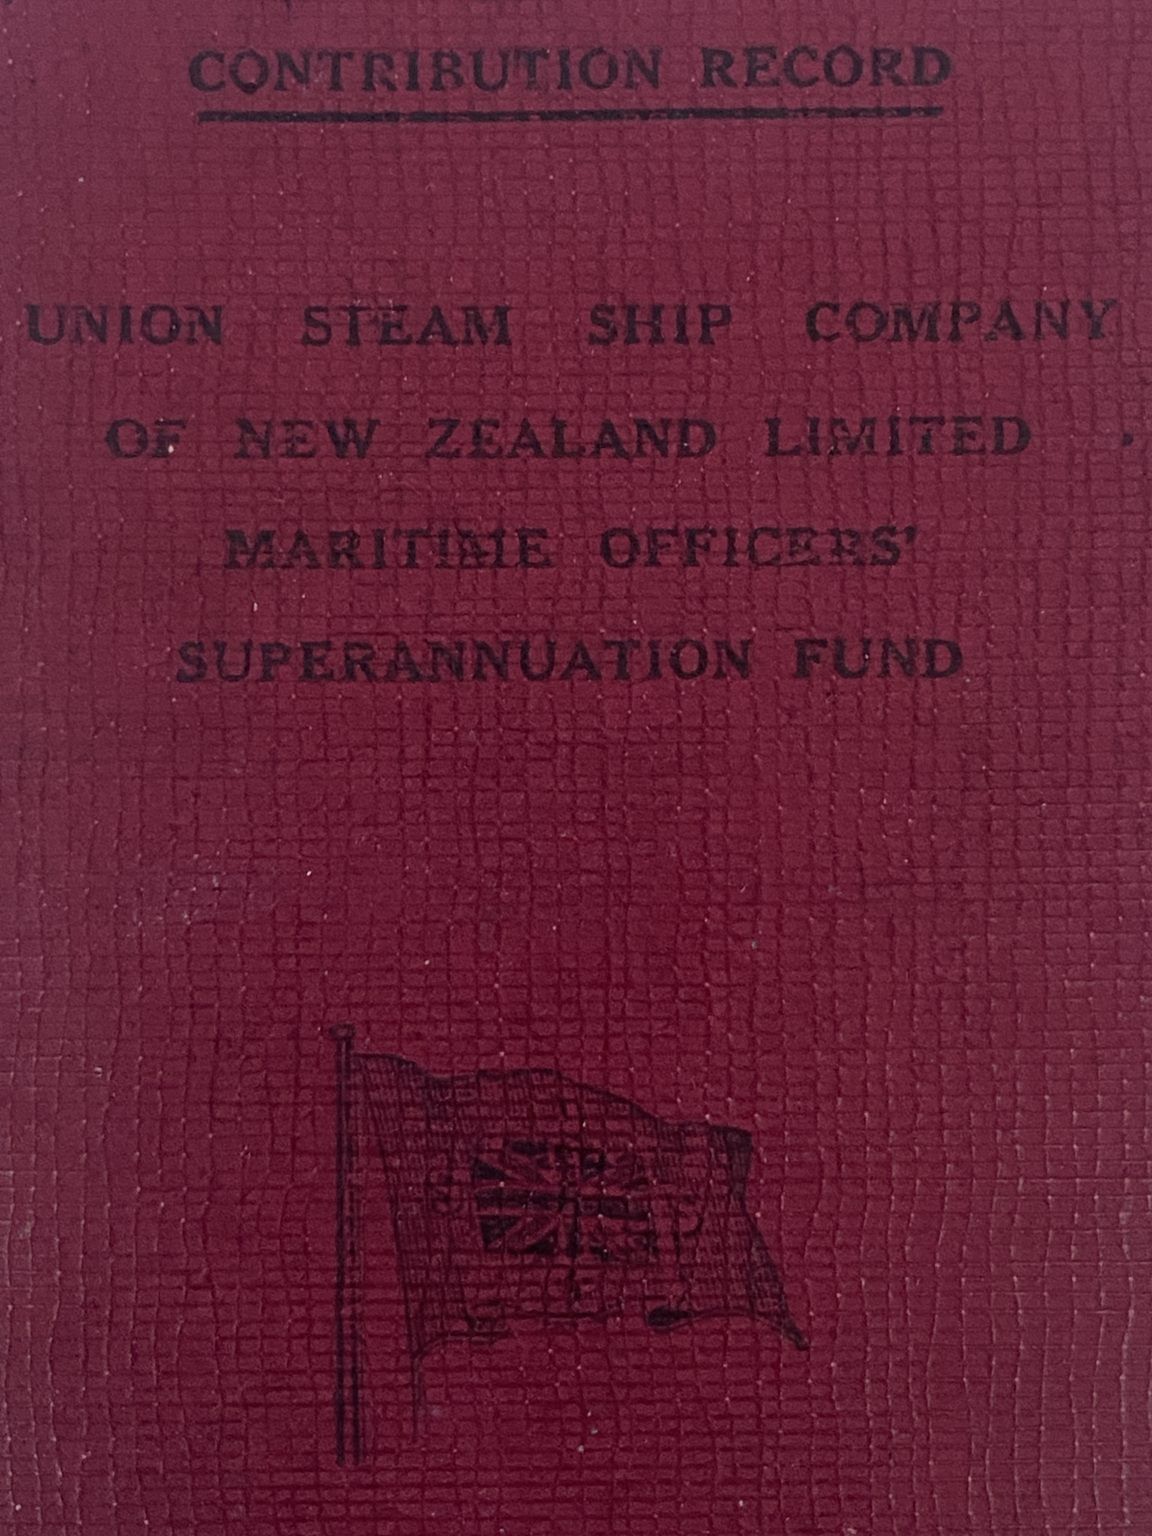 UNION STEAMSHIP COMPANY: Pocket Contribution Record to Super Fund 1946